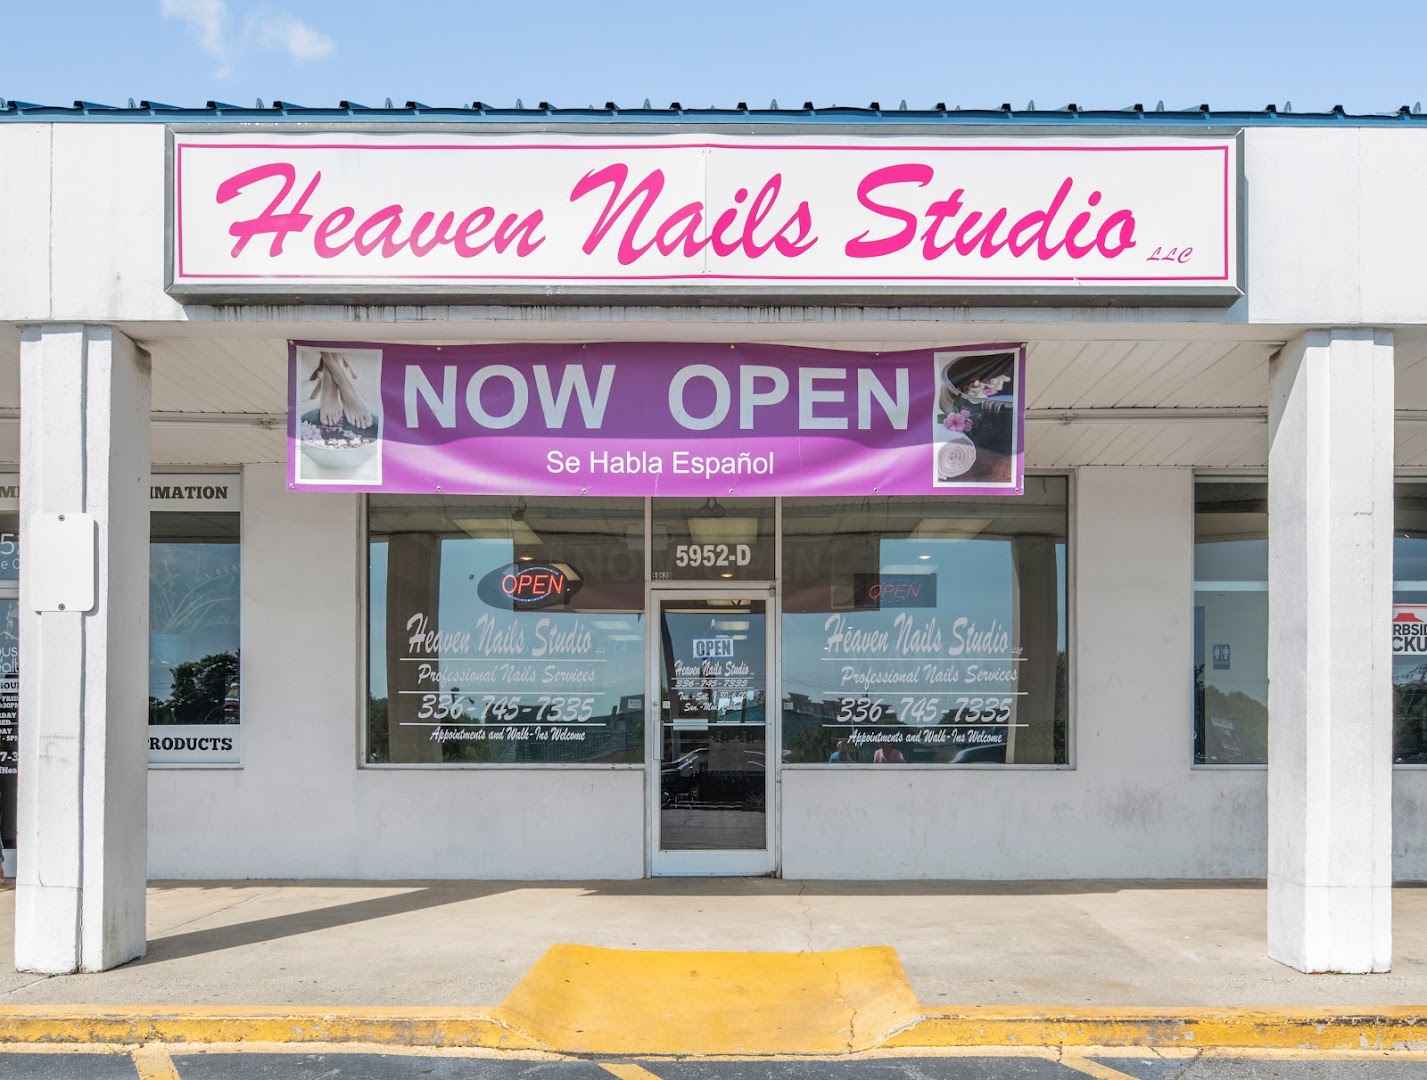 Heaven Nails Studio LLC